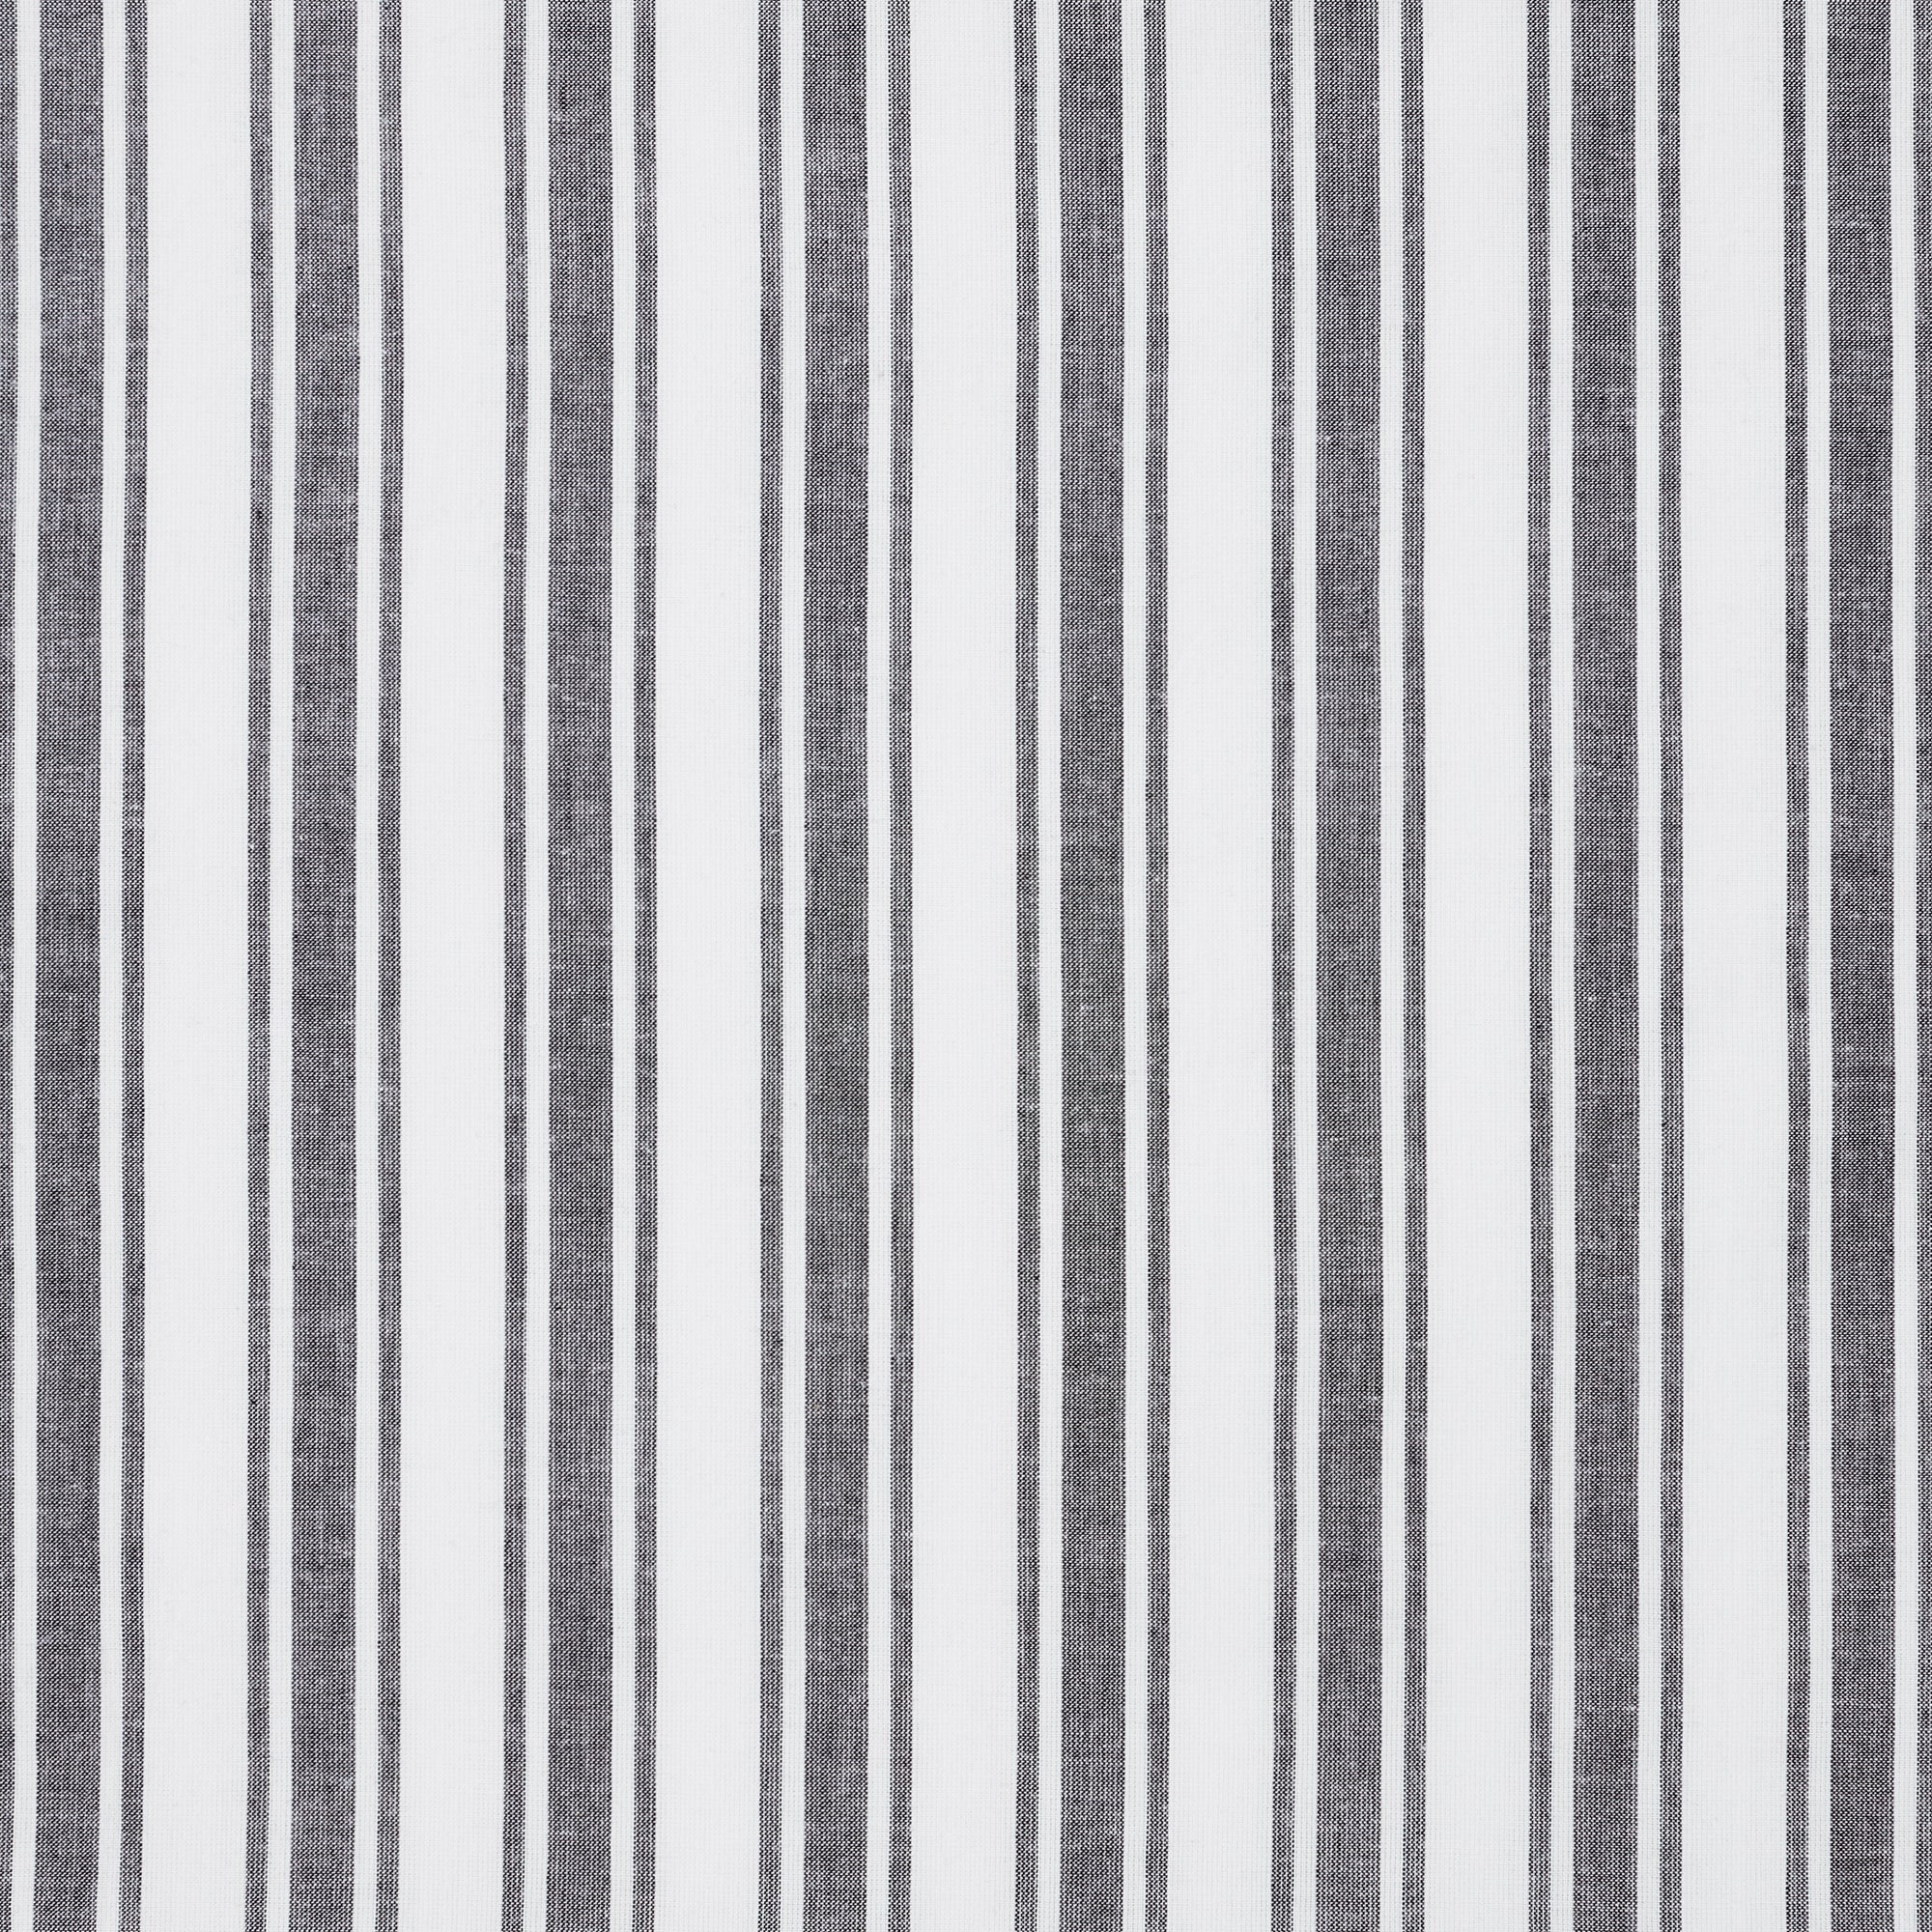 Sawyer Mill Black Ticking Stripe Prairie Long Panel Set of 2 84x36x18 VHC Brands